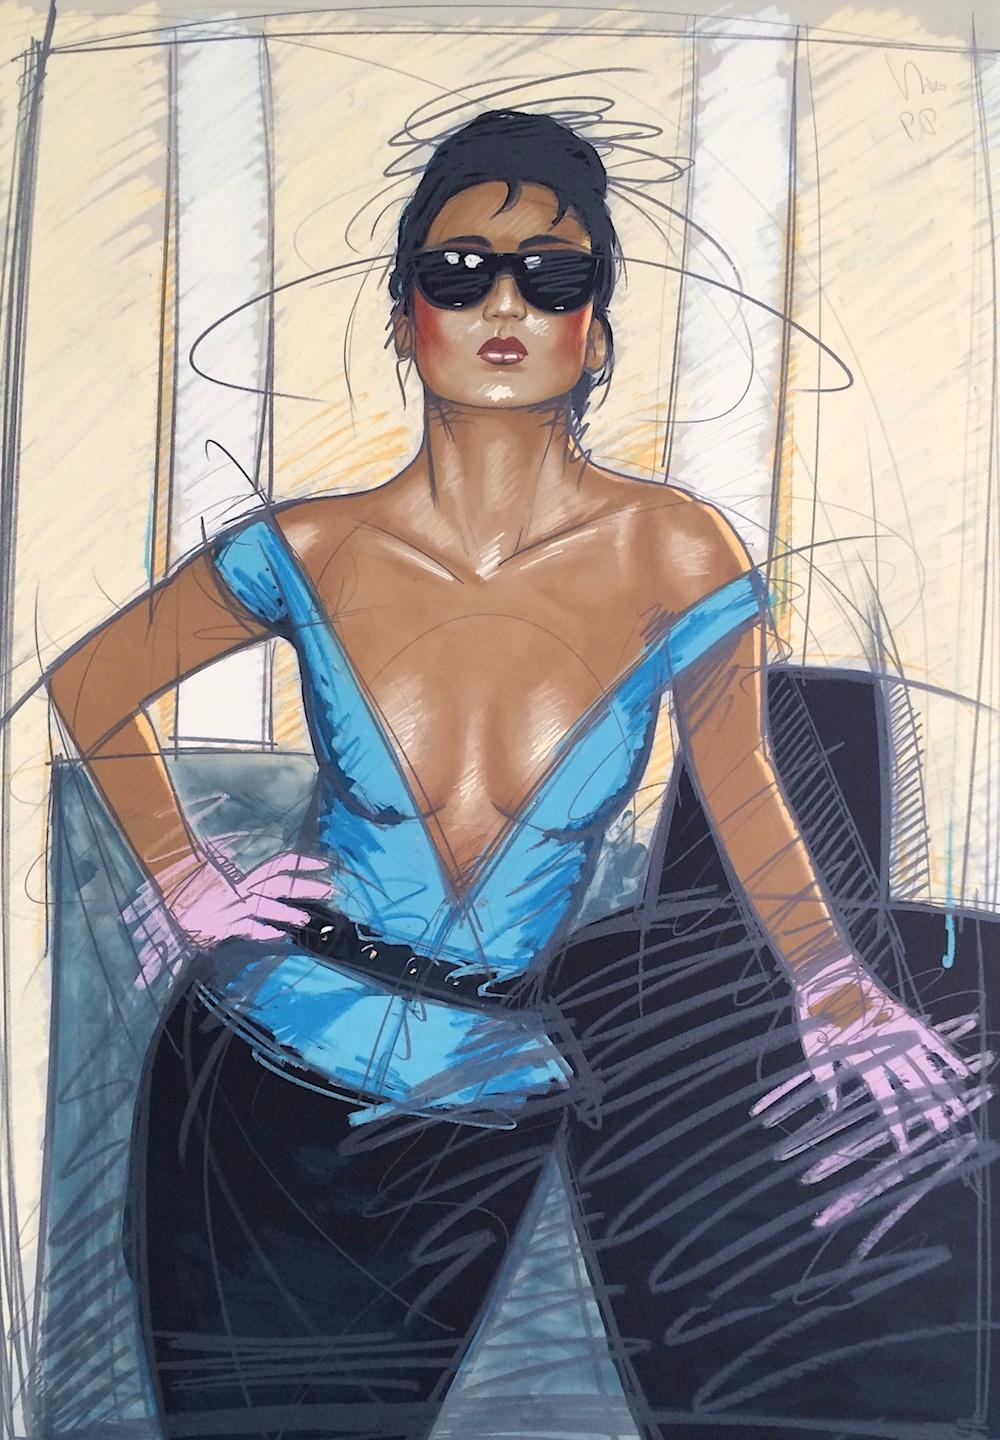 Nico Vrielink Portrait Print - JEANE Signed Lithograph, Fashion Portrait, Exotic Woman, Dark Sunglasses, Gloves